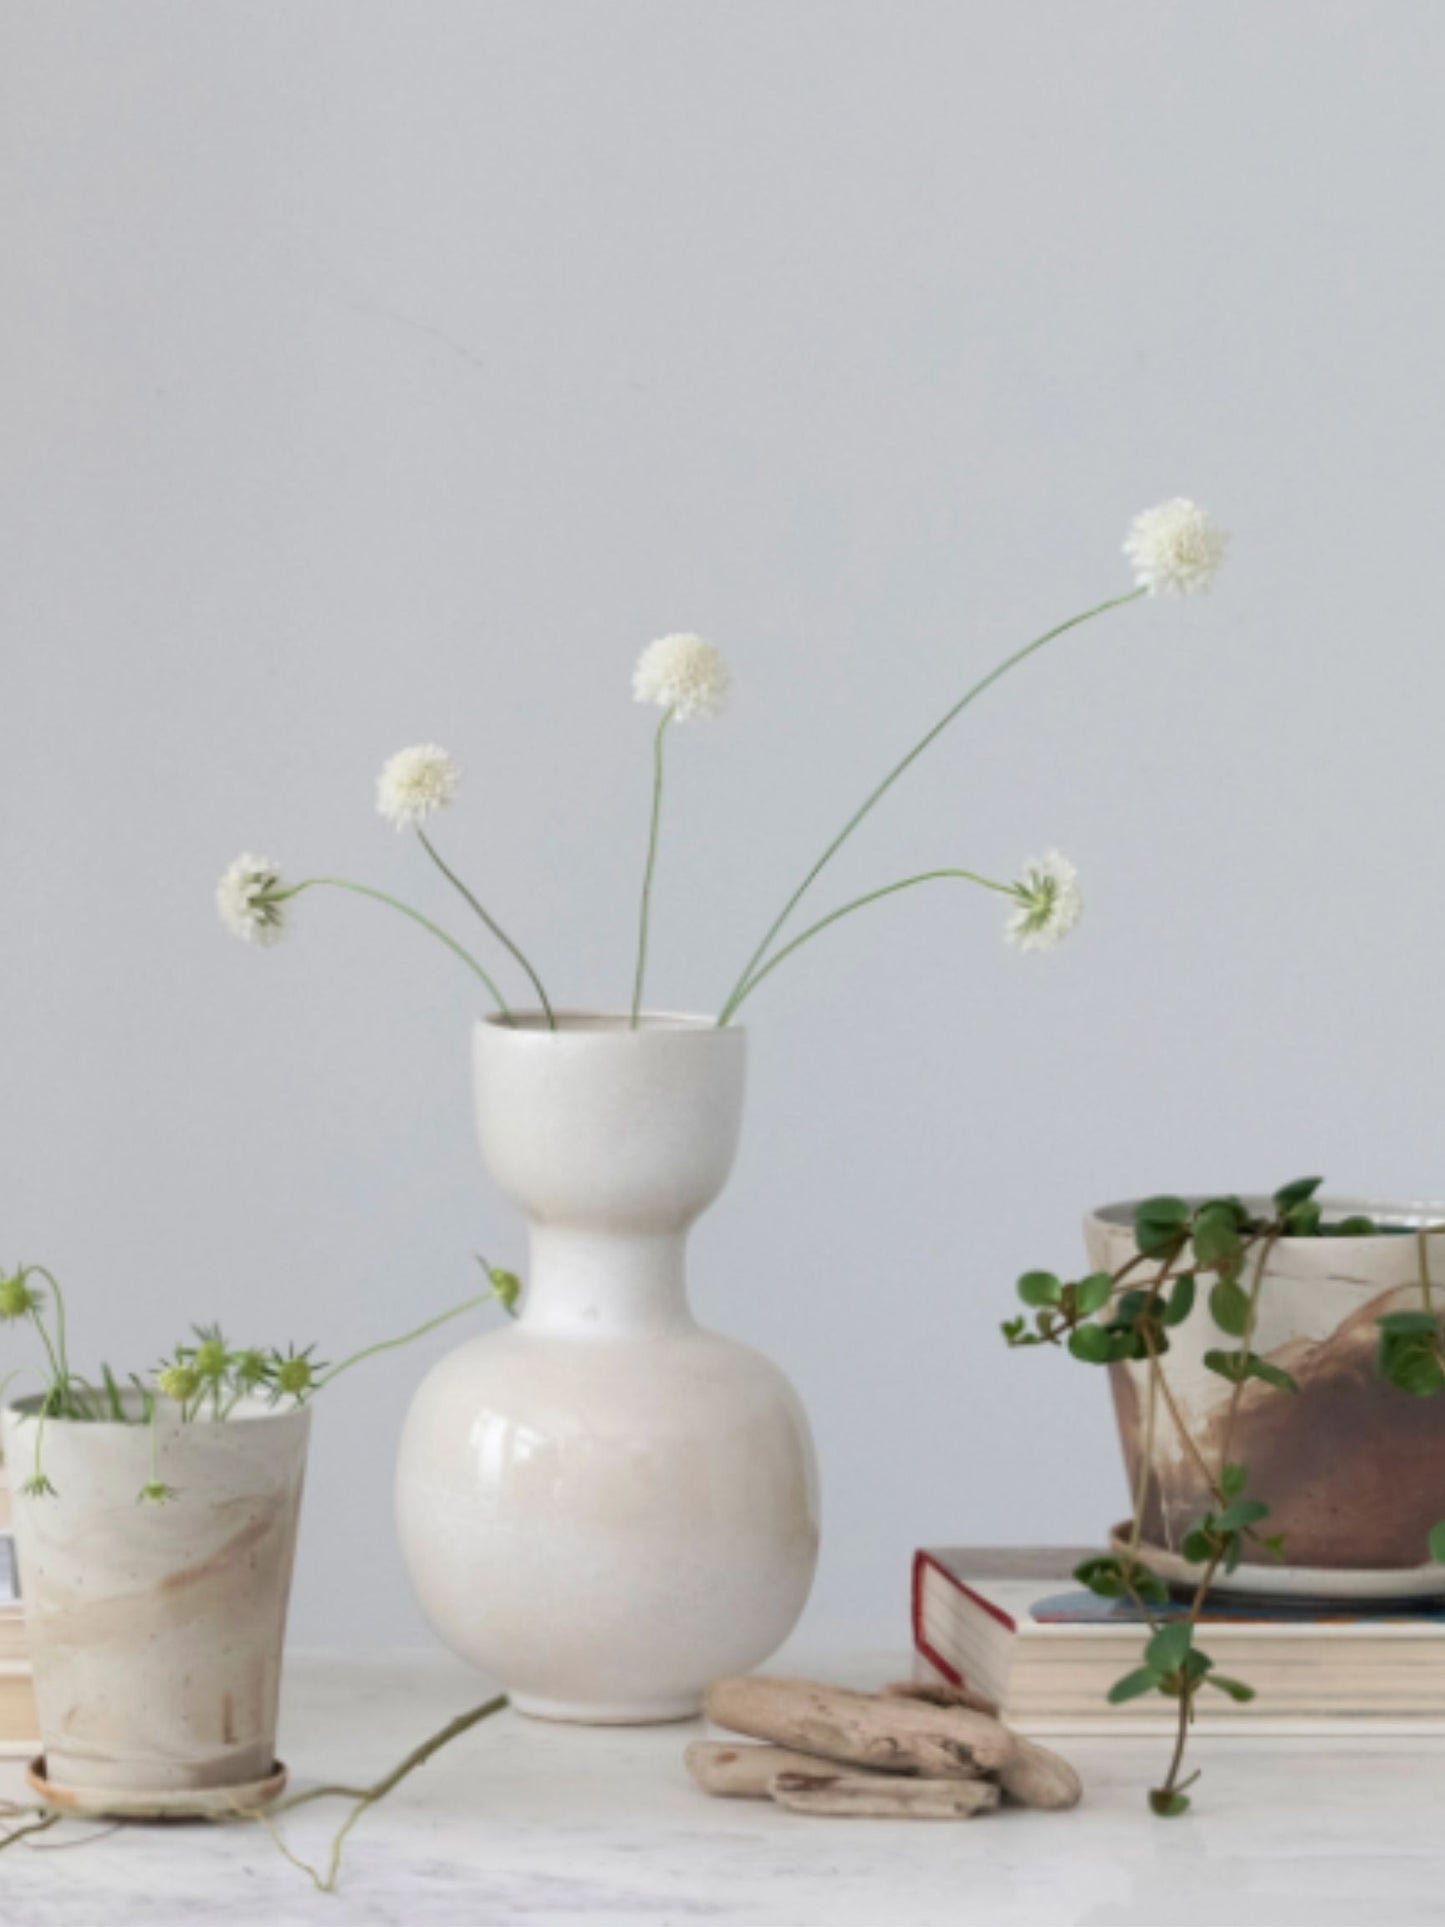 Margo Stoneware Vase (PICK UP ONLY)